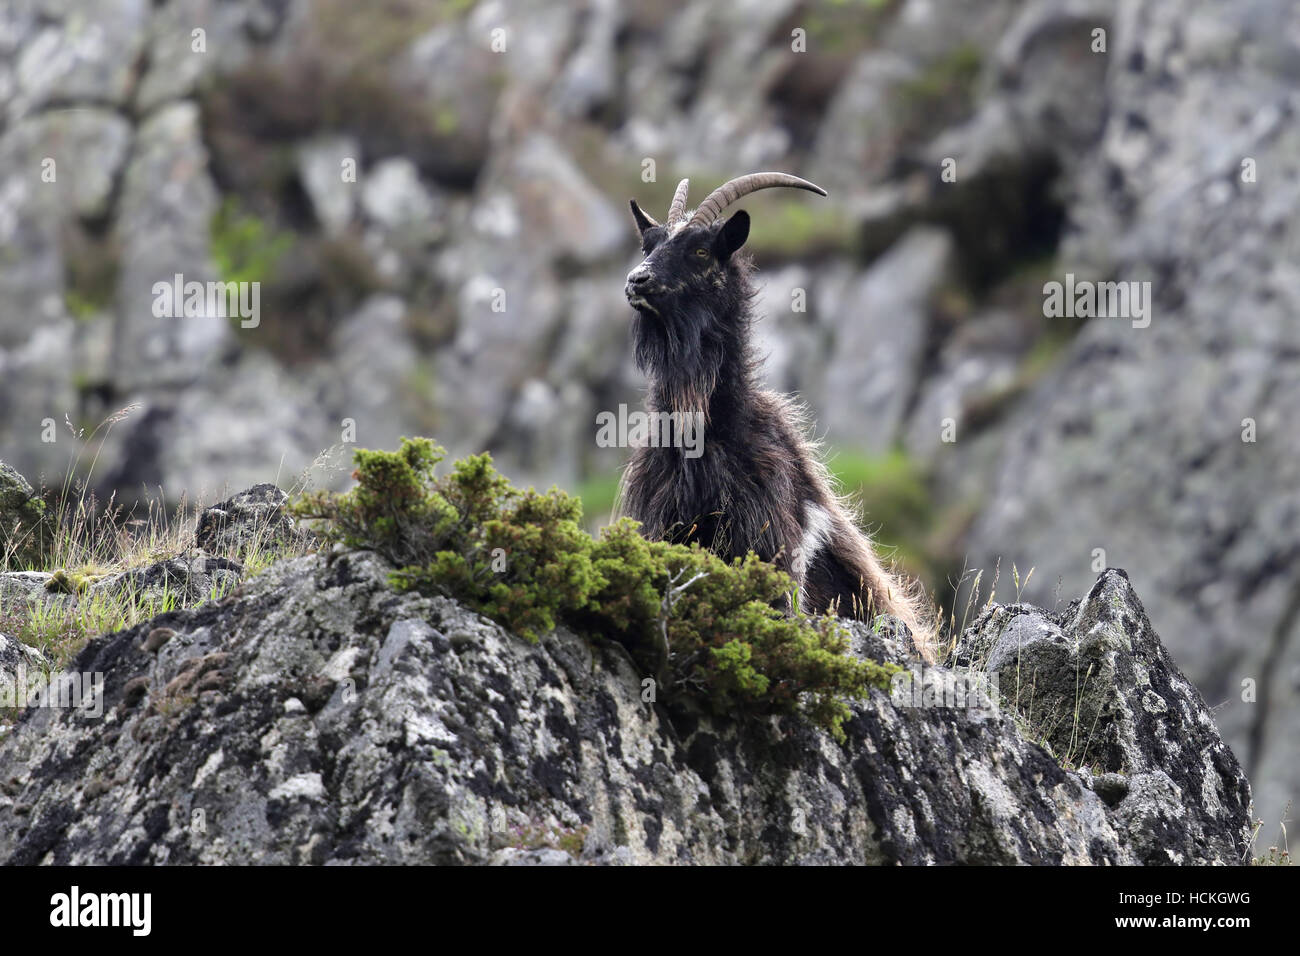 Wild British Primitive Goats also know as Wild Feral Goats. Taken in Findhorn Valley,  Scotland. Stock Photo